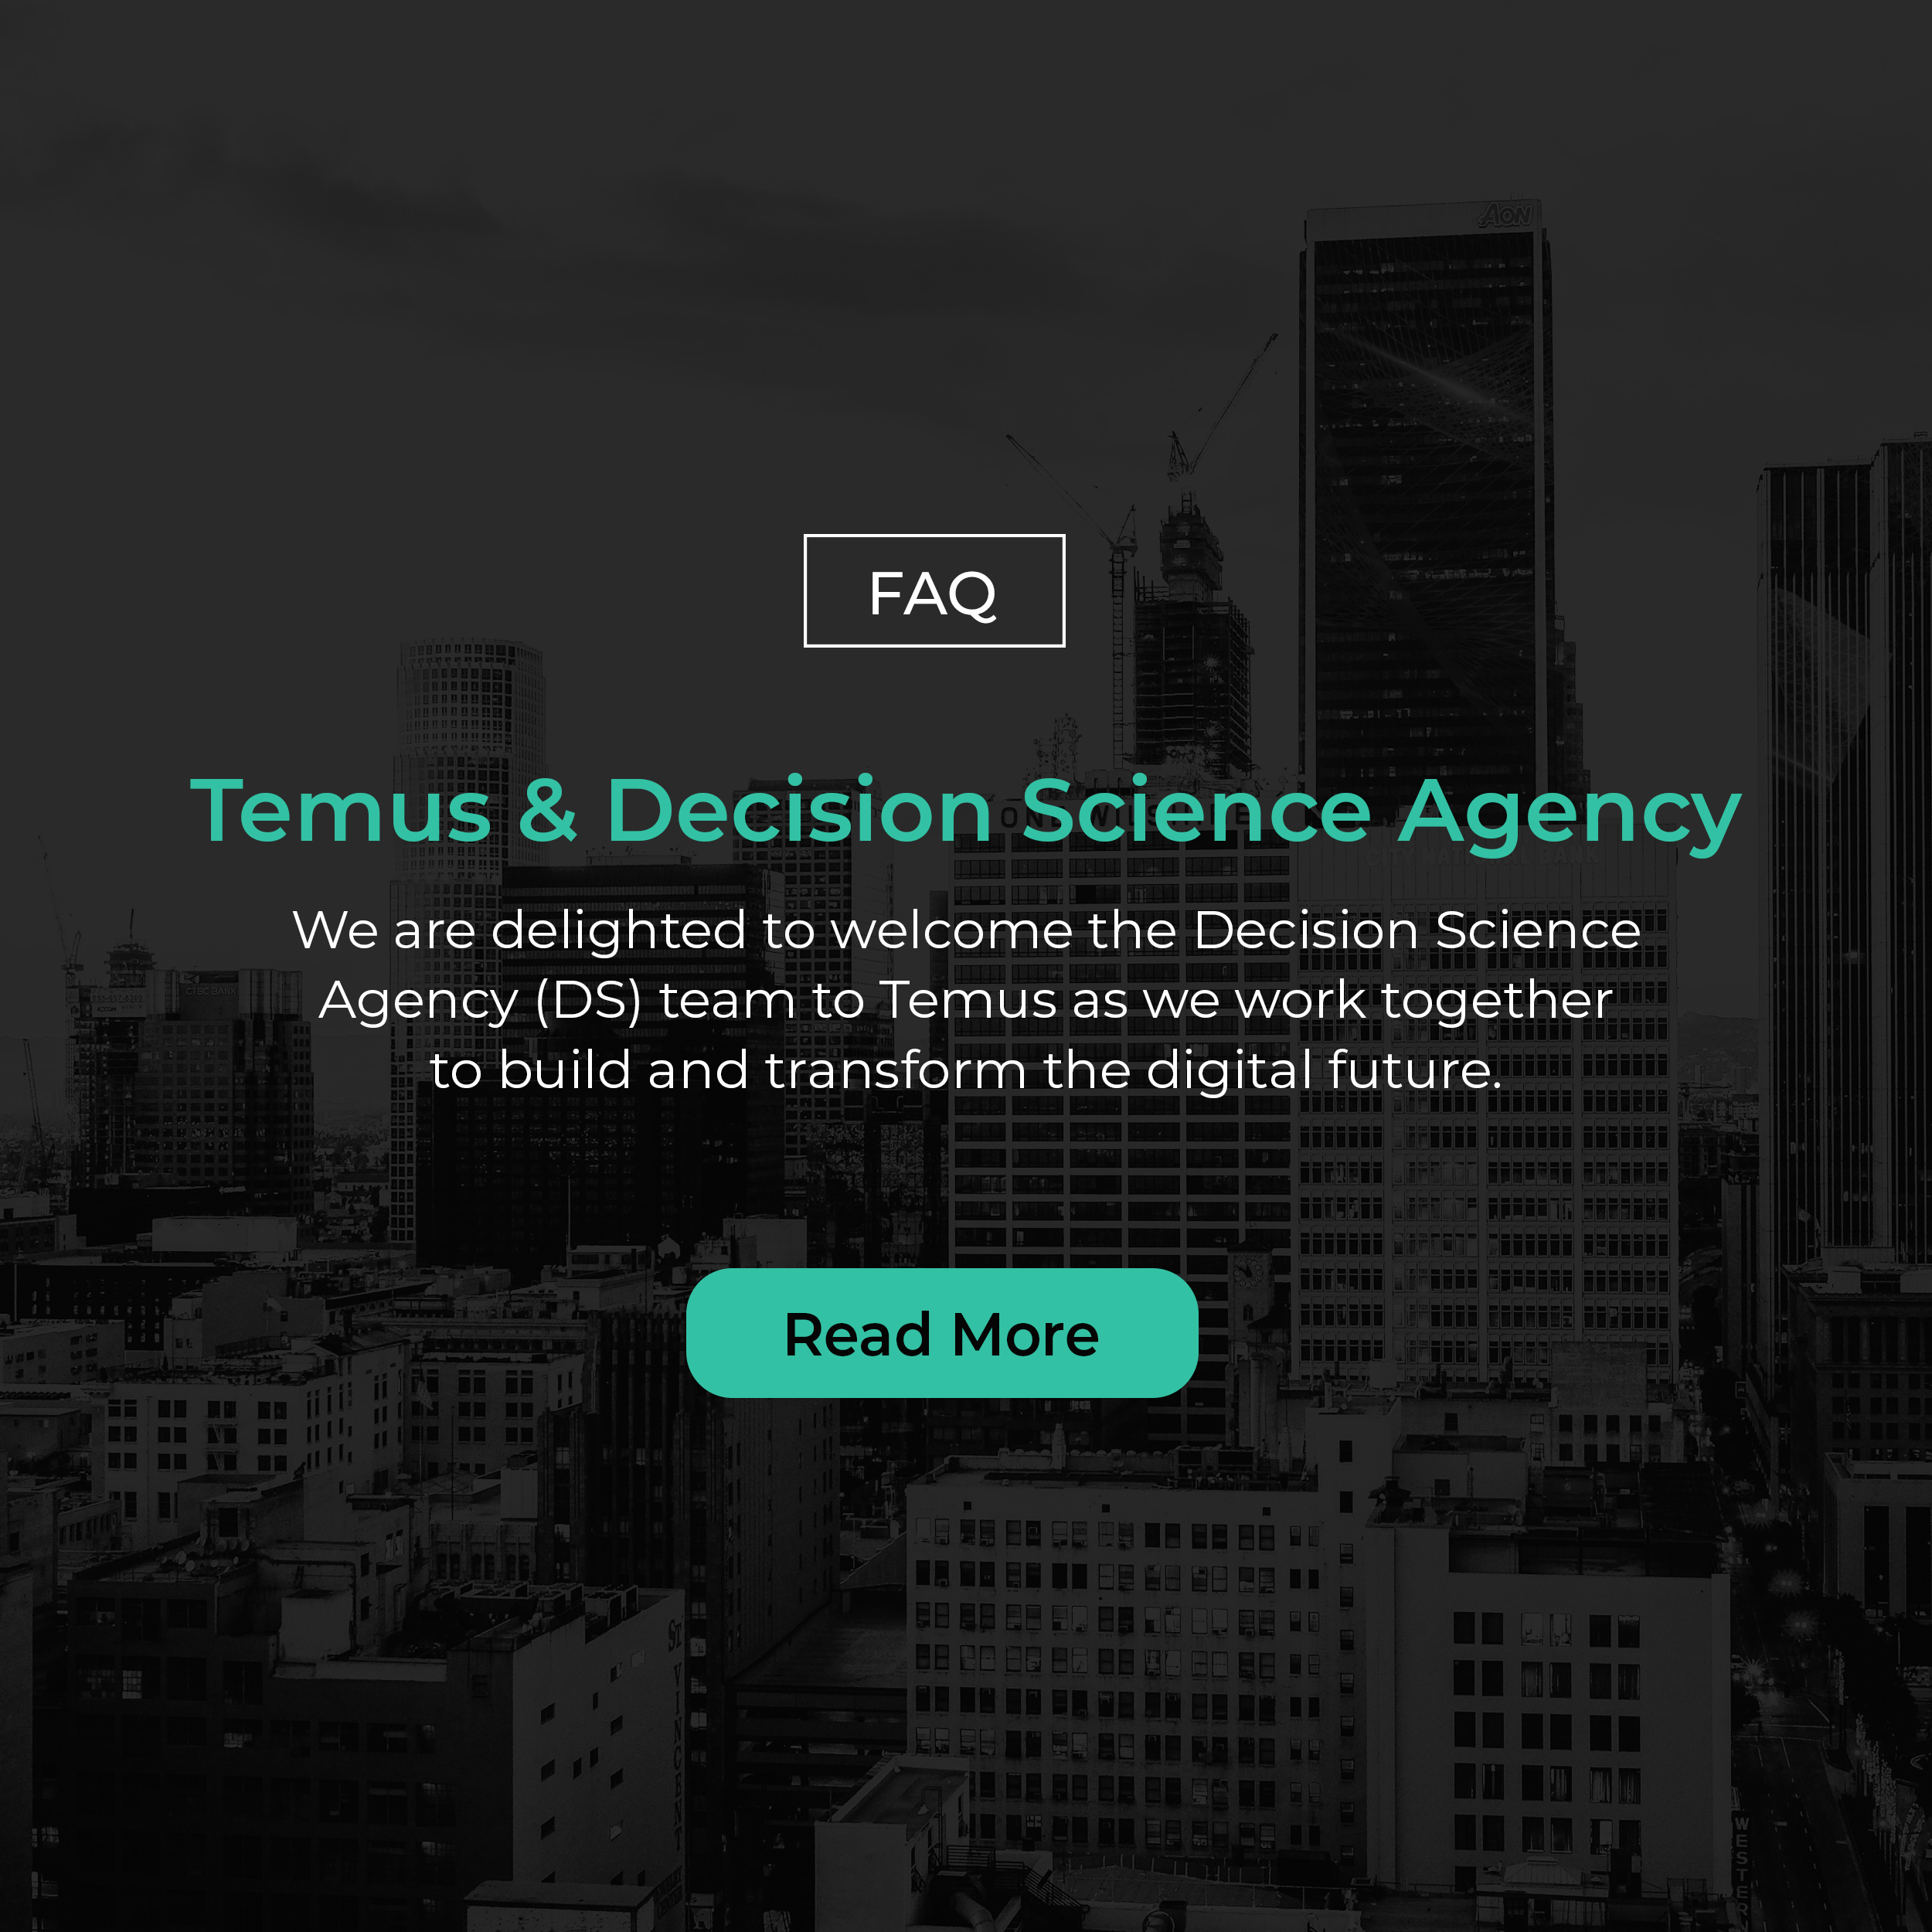 FAQs: Temus & Decision Science Agency